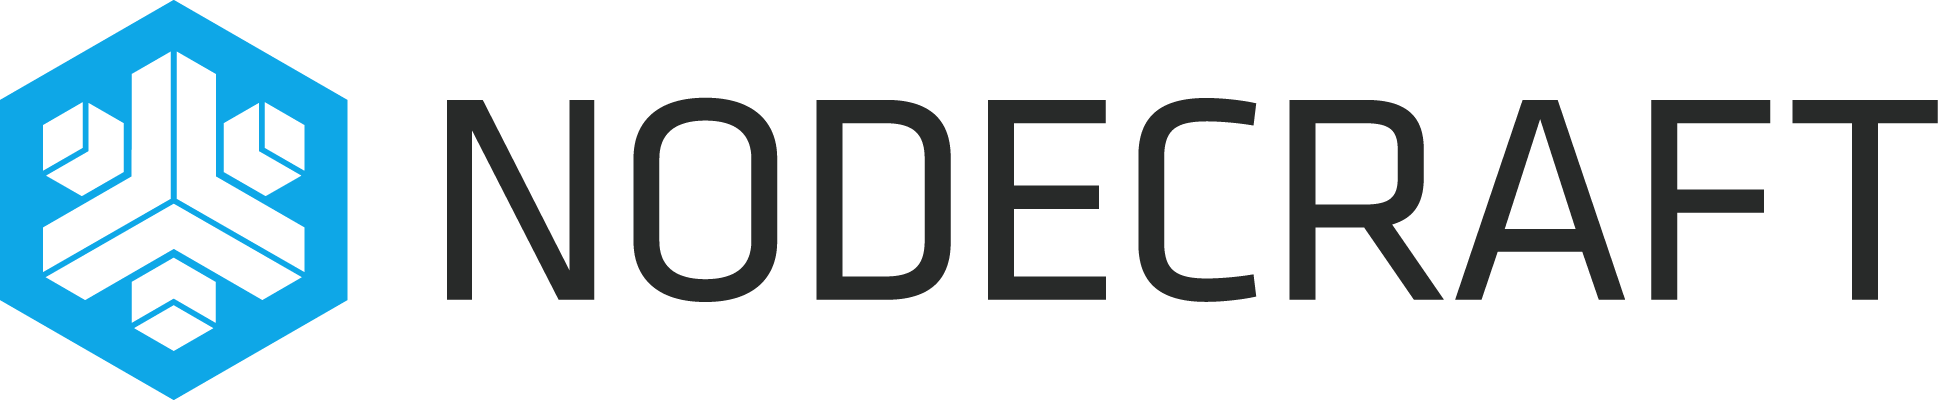 Nodecraft Sponsorship Logo